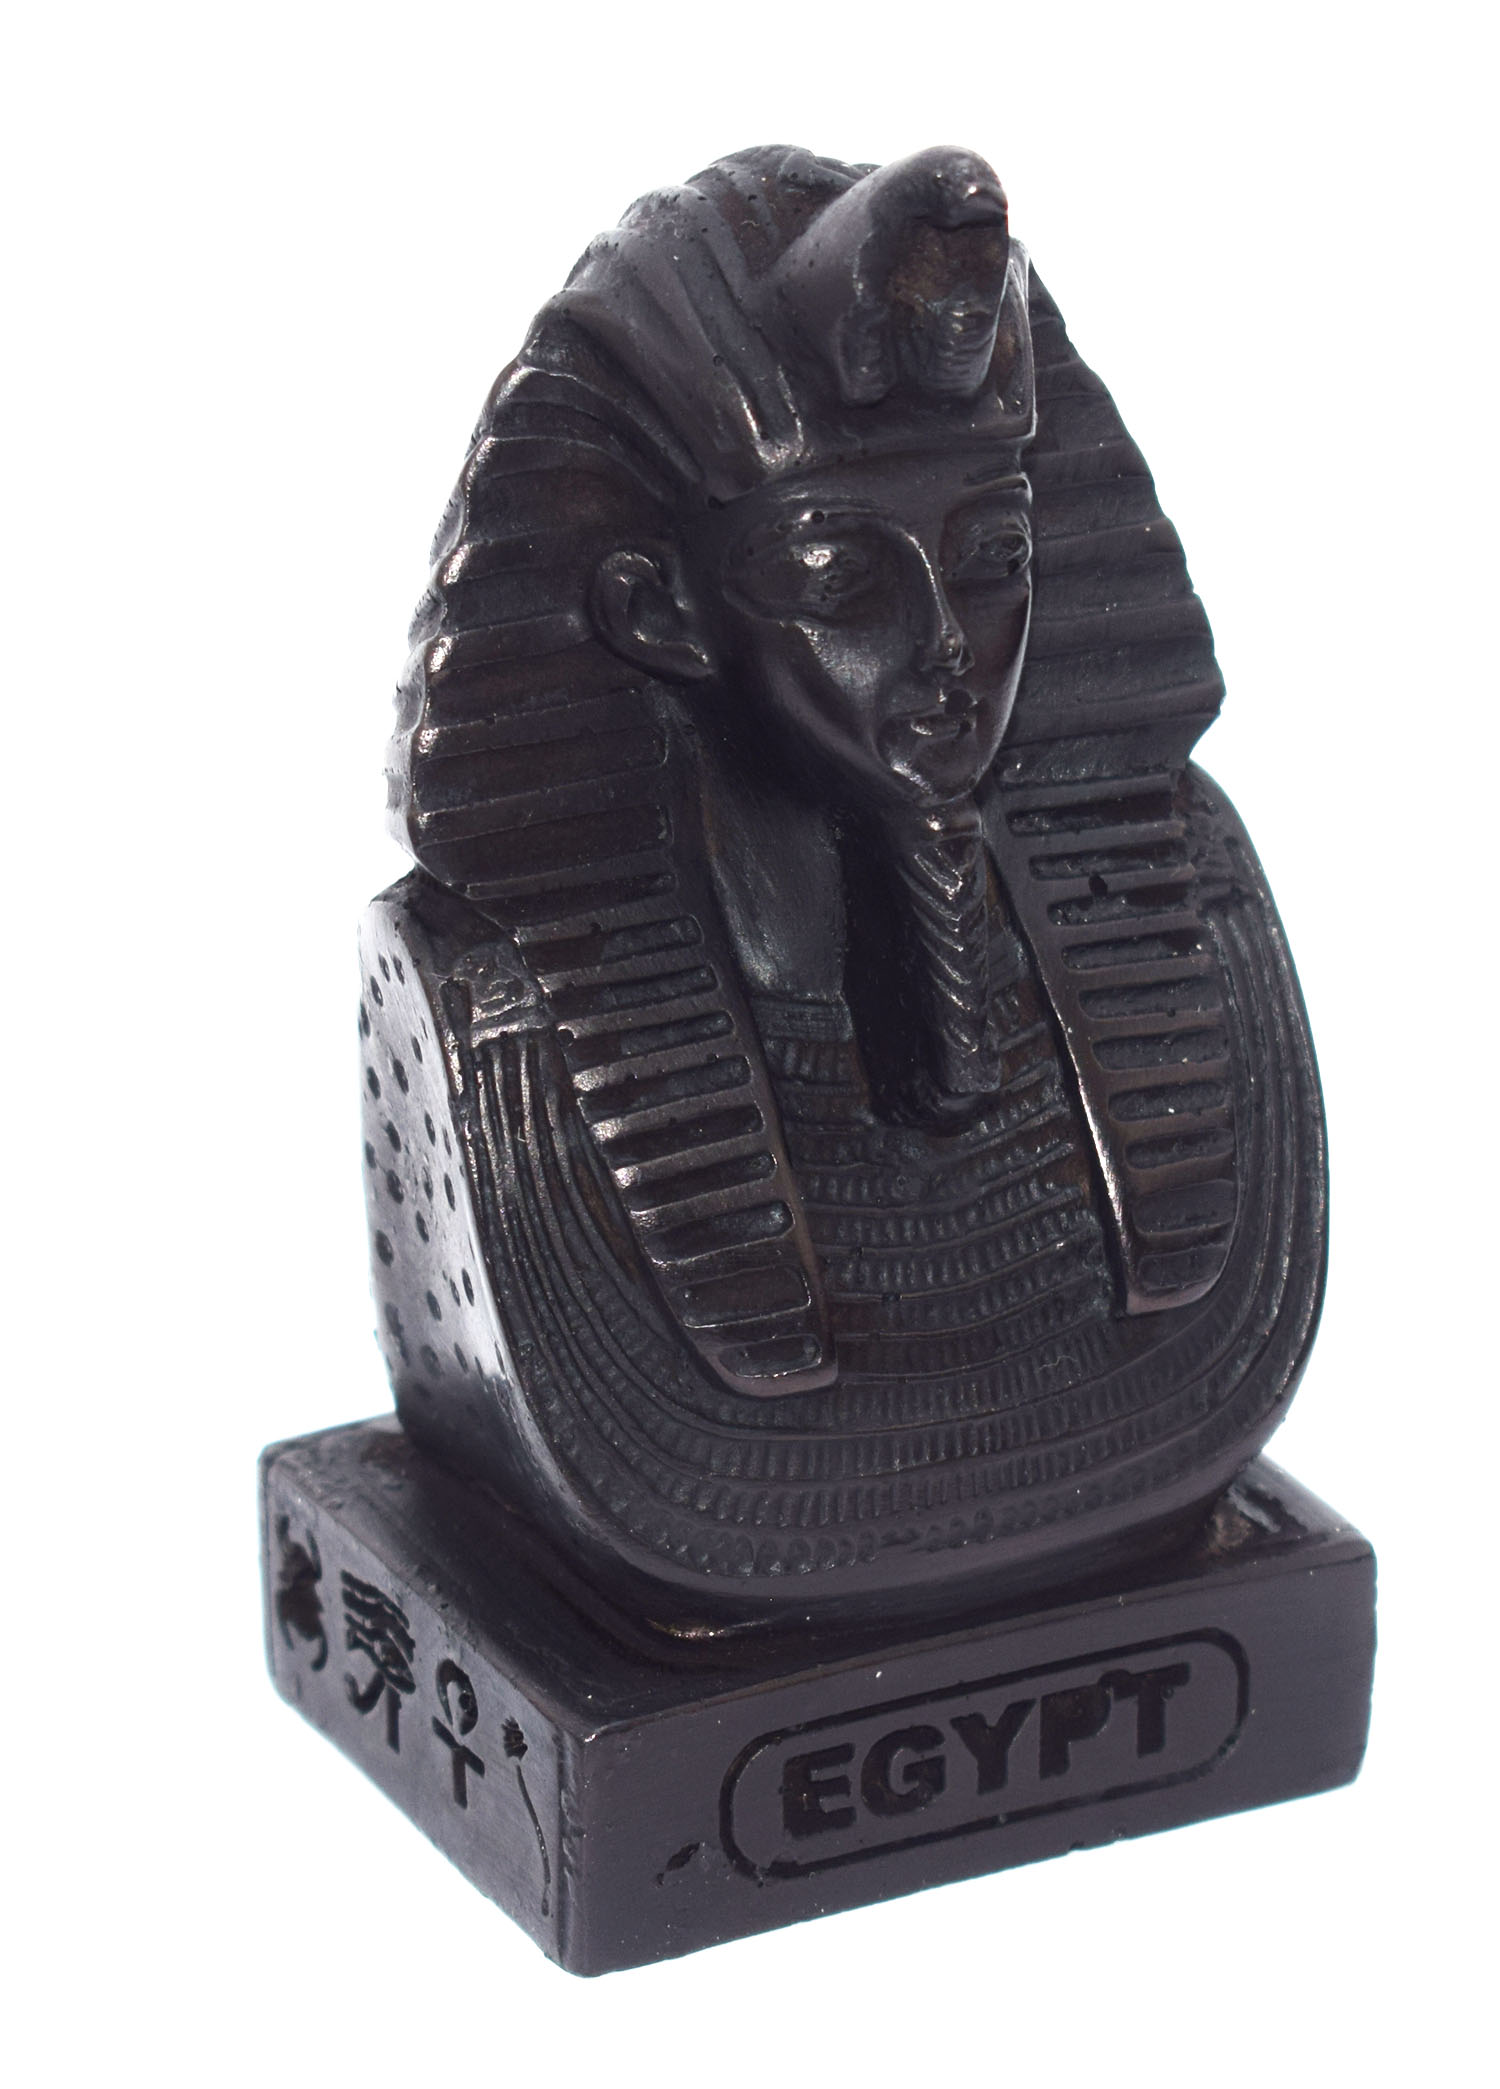 immatgar pharaonic Egyptian King Tutankhamun Statue Egyptian souvenirs gifts  for Women Girls and mother ( Black - 9.5 CM long )